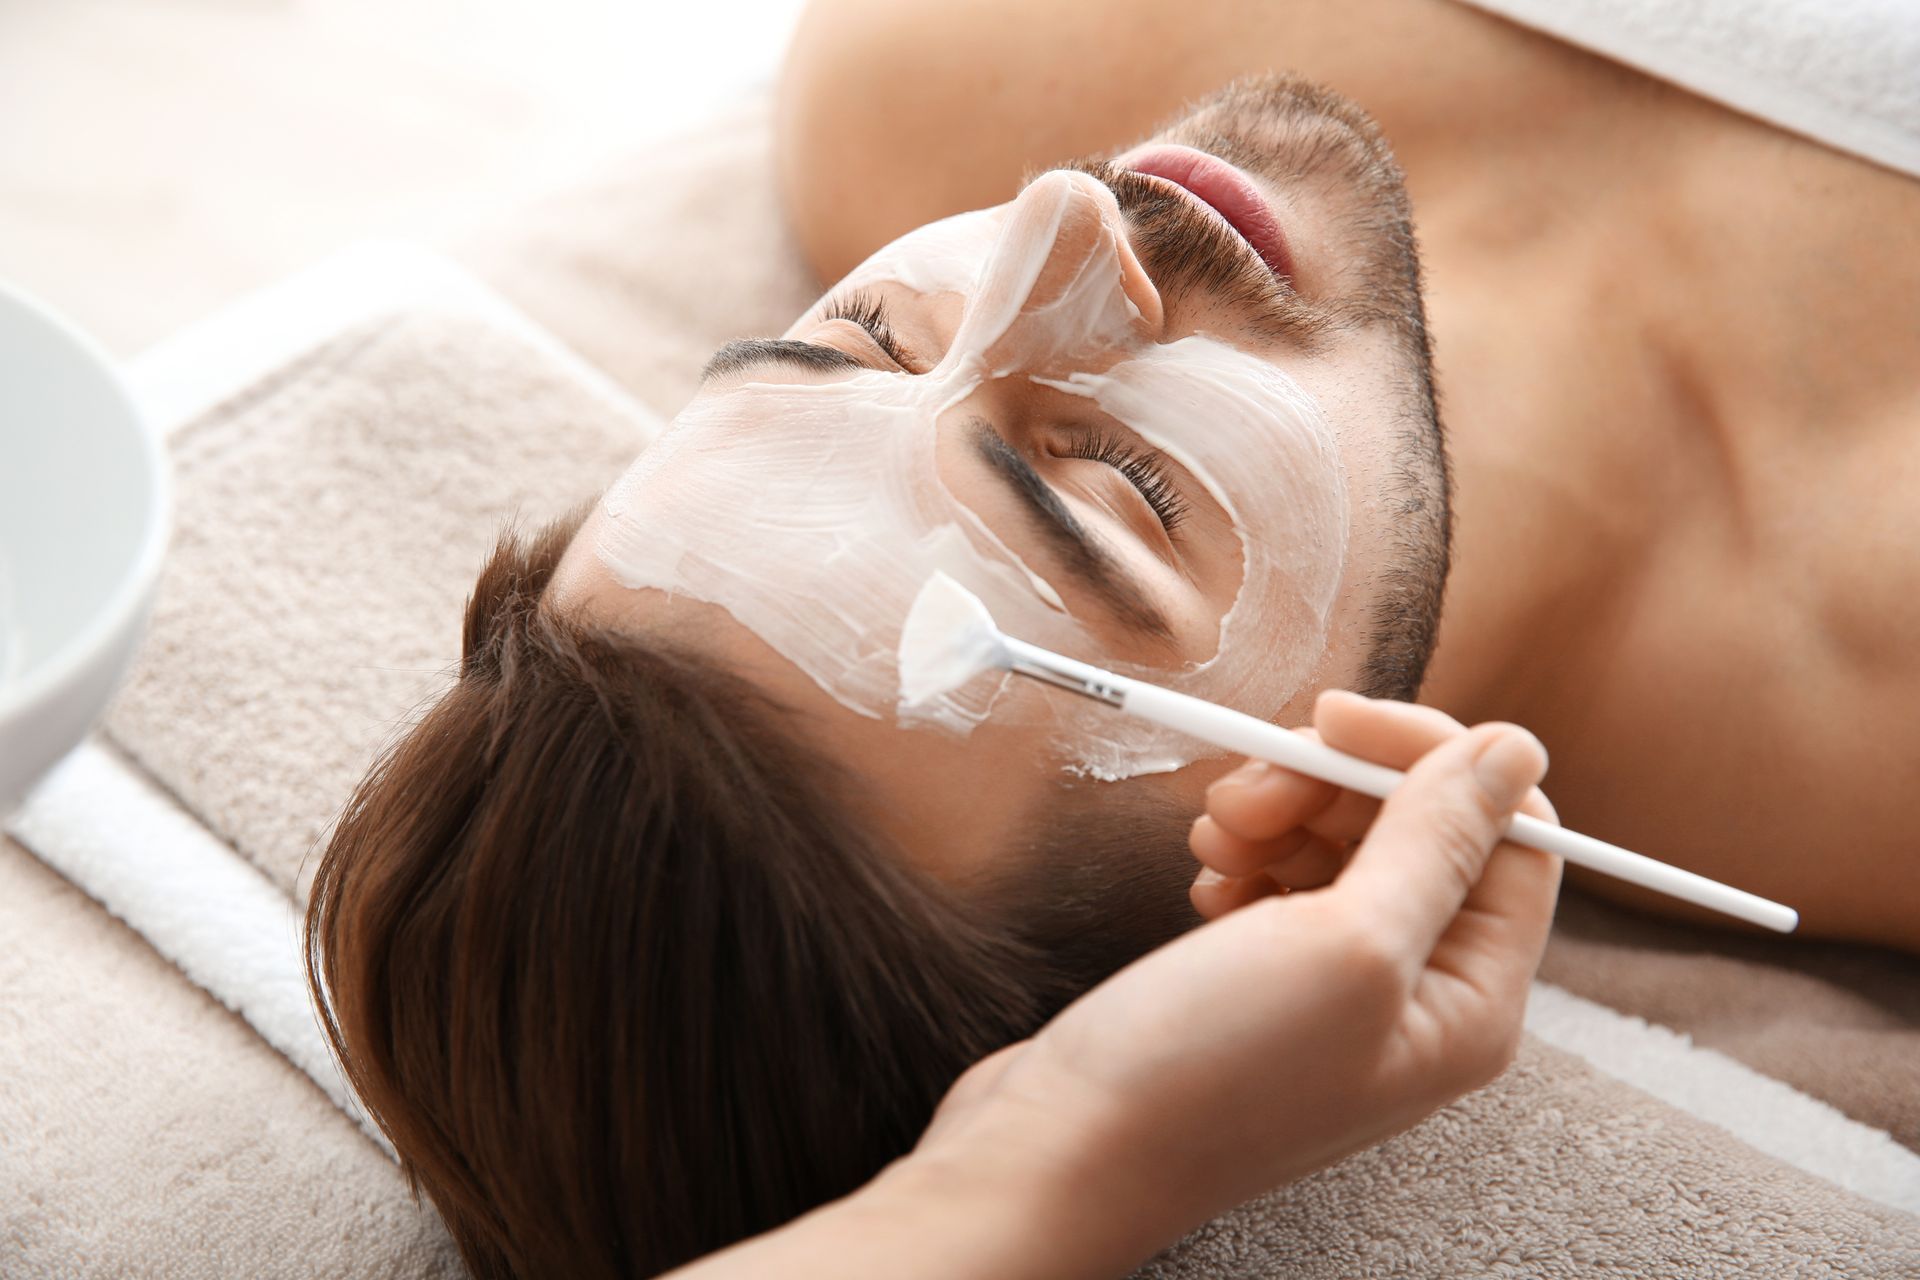 a man is getting a facial treatment at a spa 